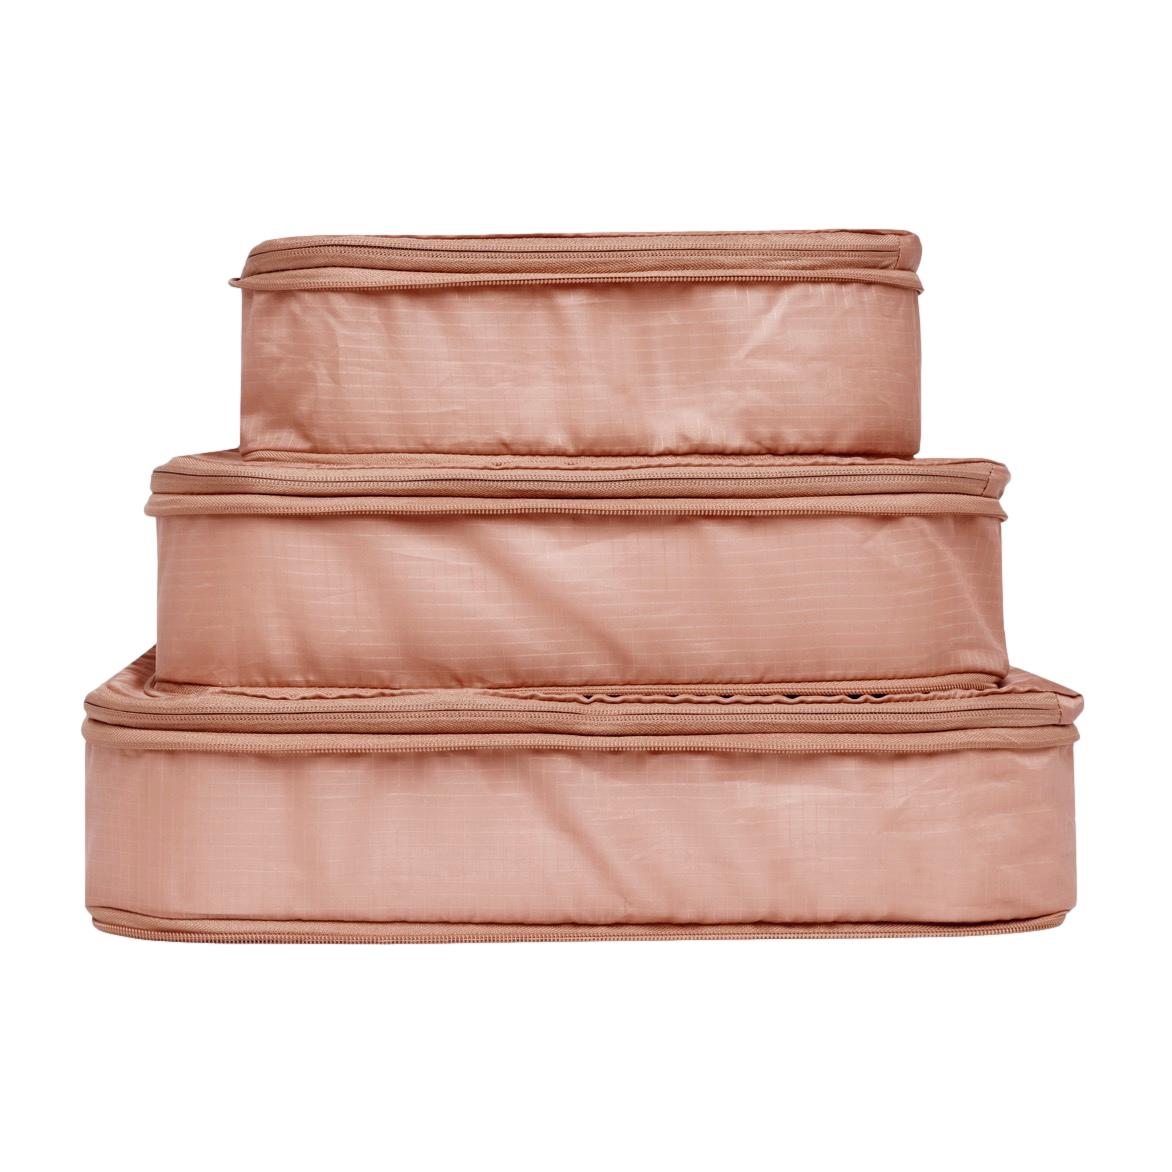 Bag-all Basic Compression Packing Cubes, 3-pack Pink/Blush - Bag-all